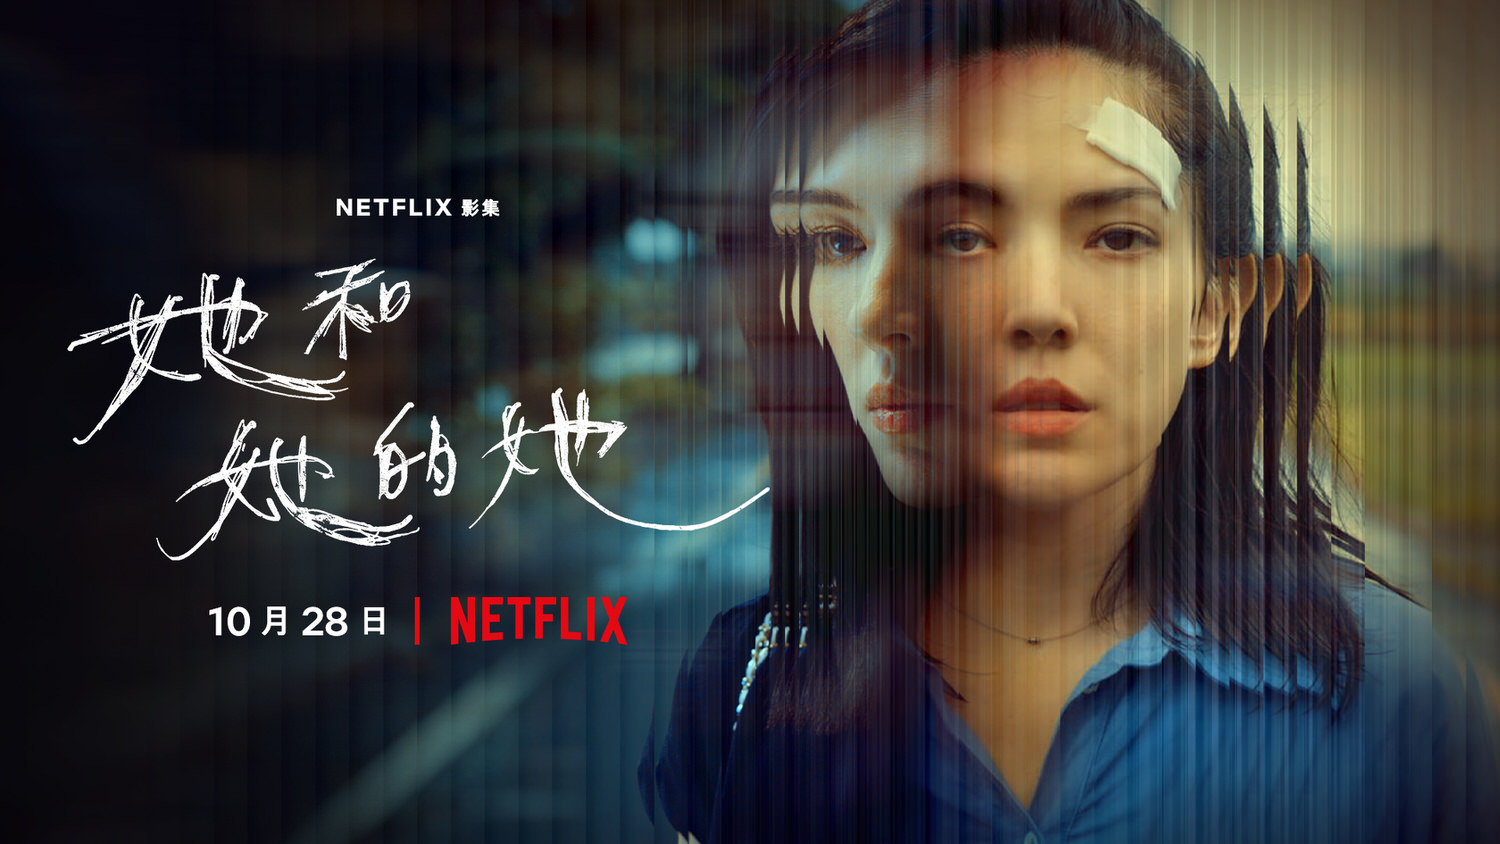 Netflix懸疑台劇《她和她的她》許瑋甯、李程彬、賈靜雯、吳慷仁